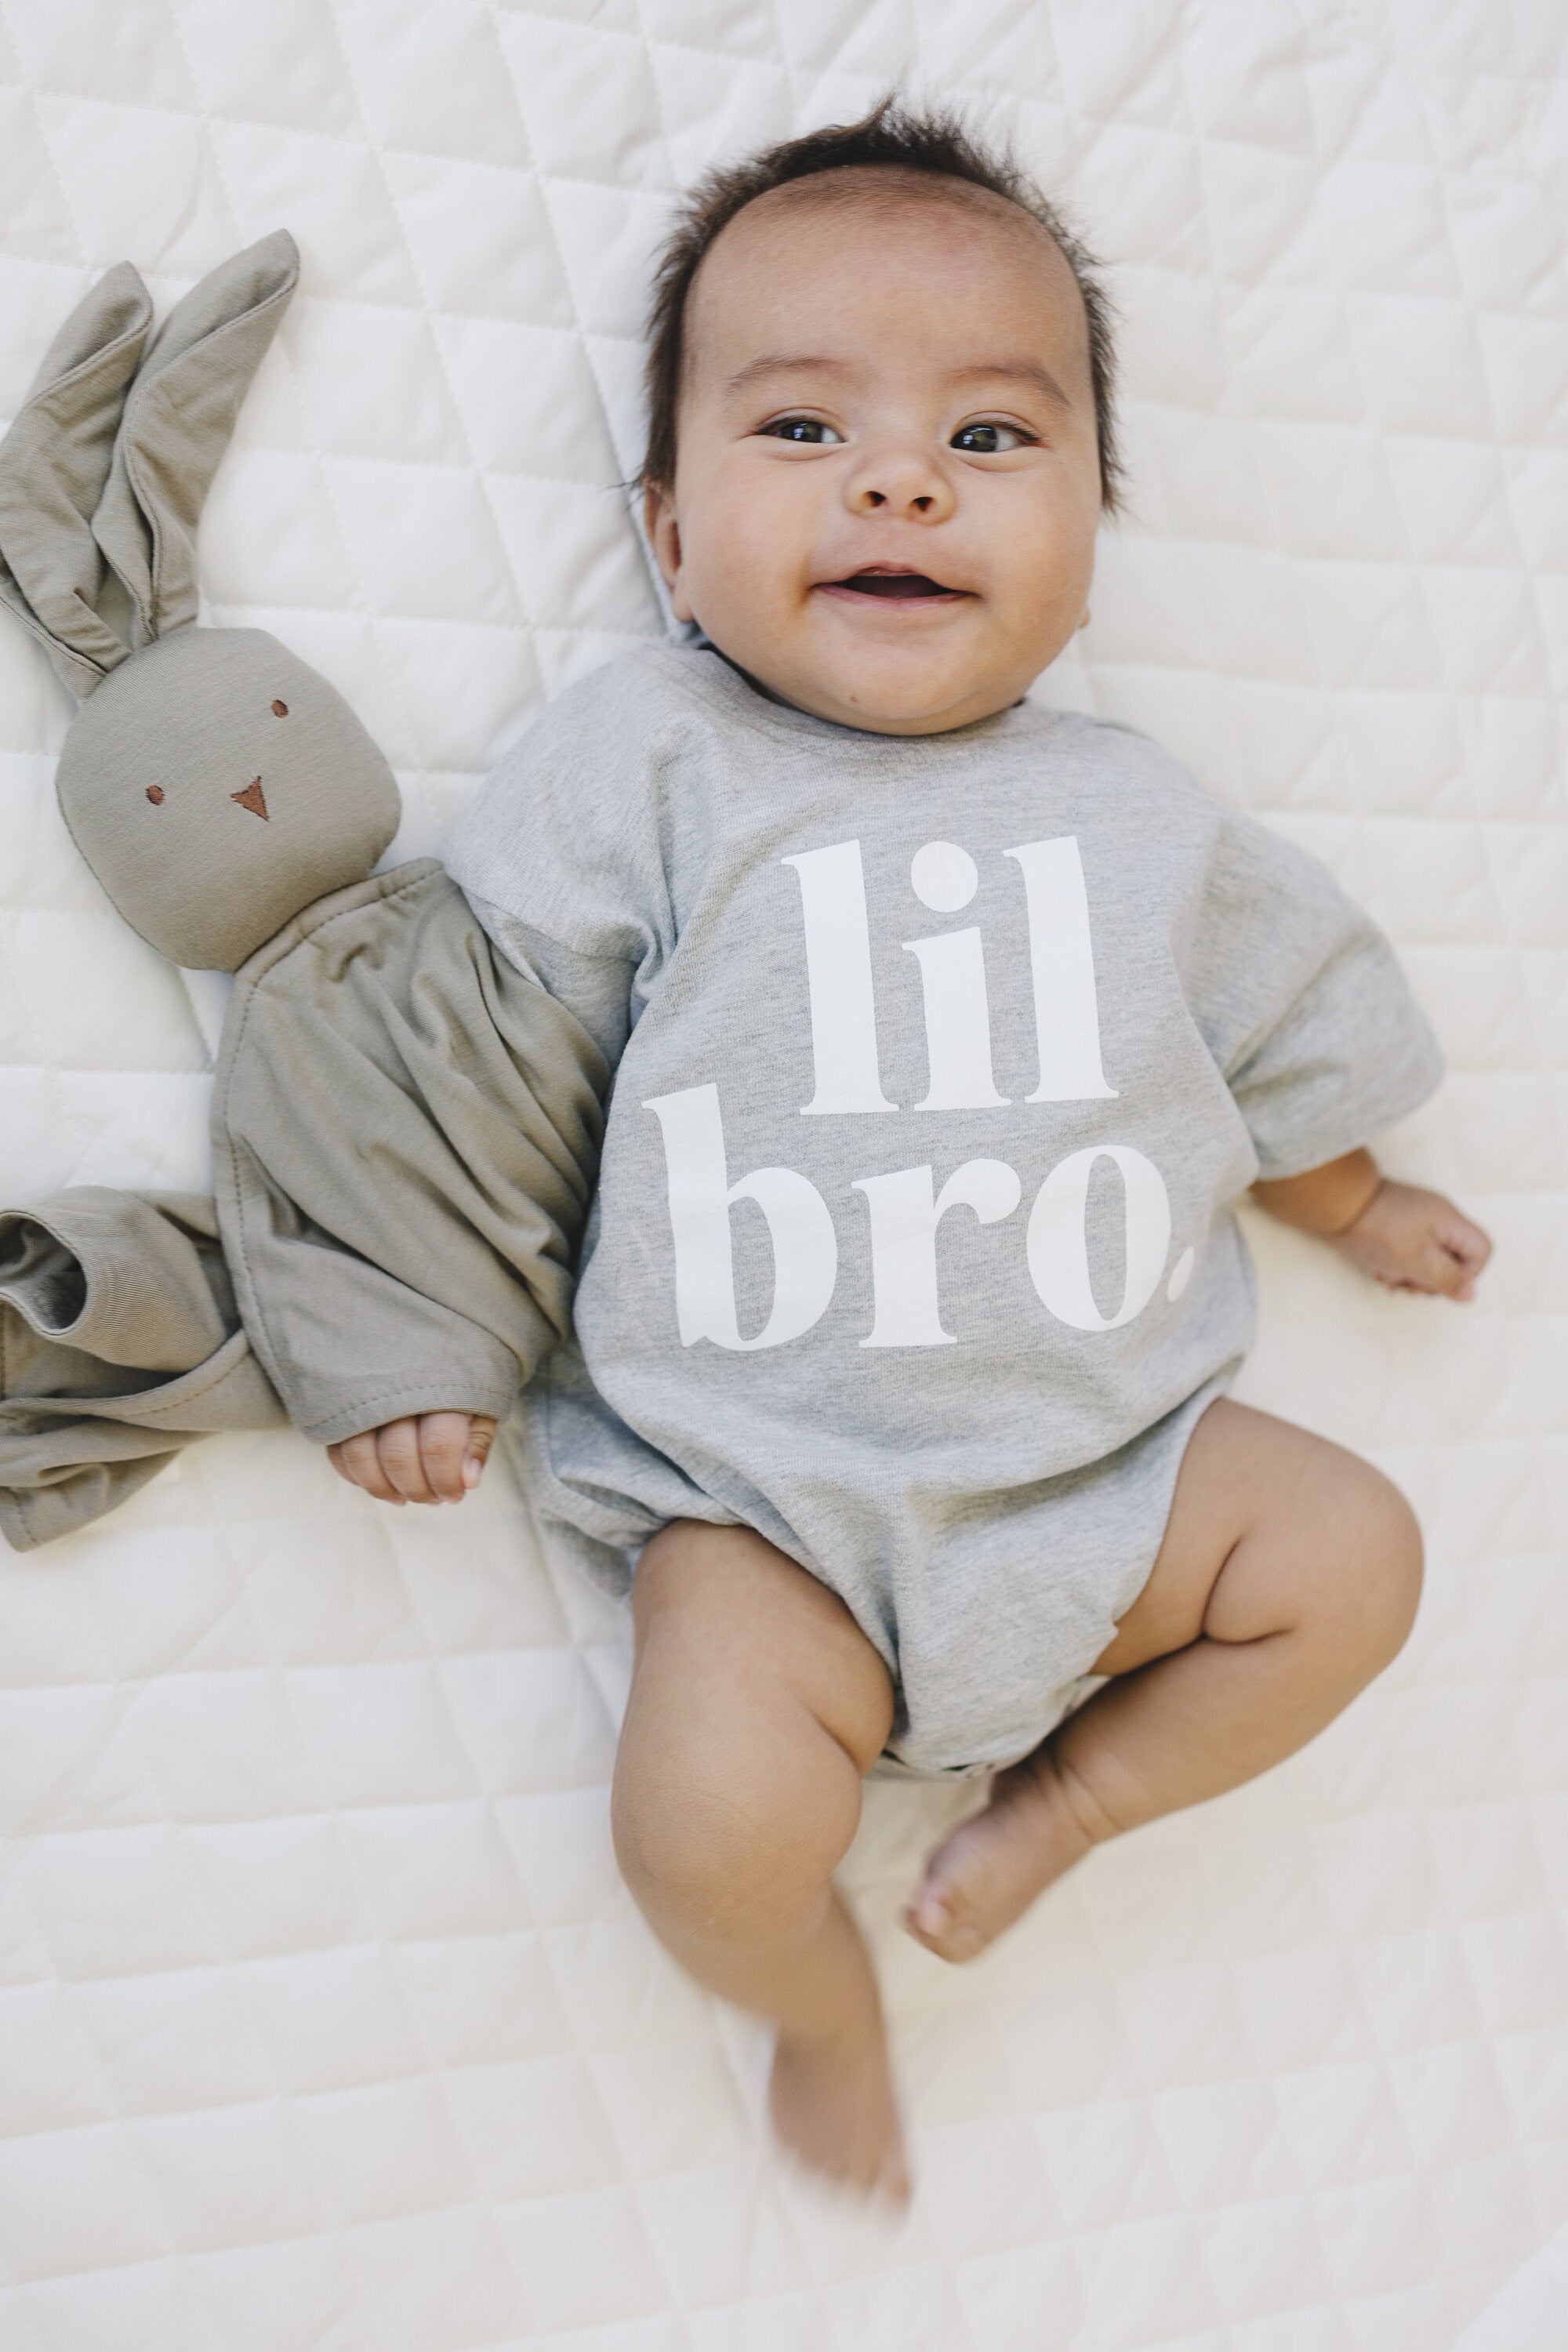 Lil Bro T-Shirt Romper - more colors